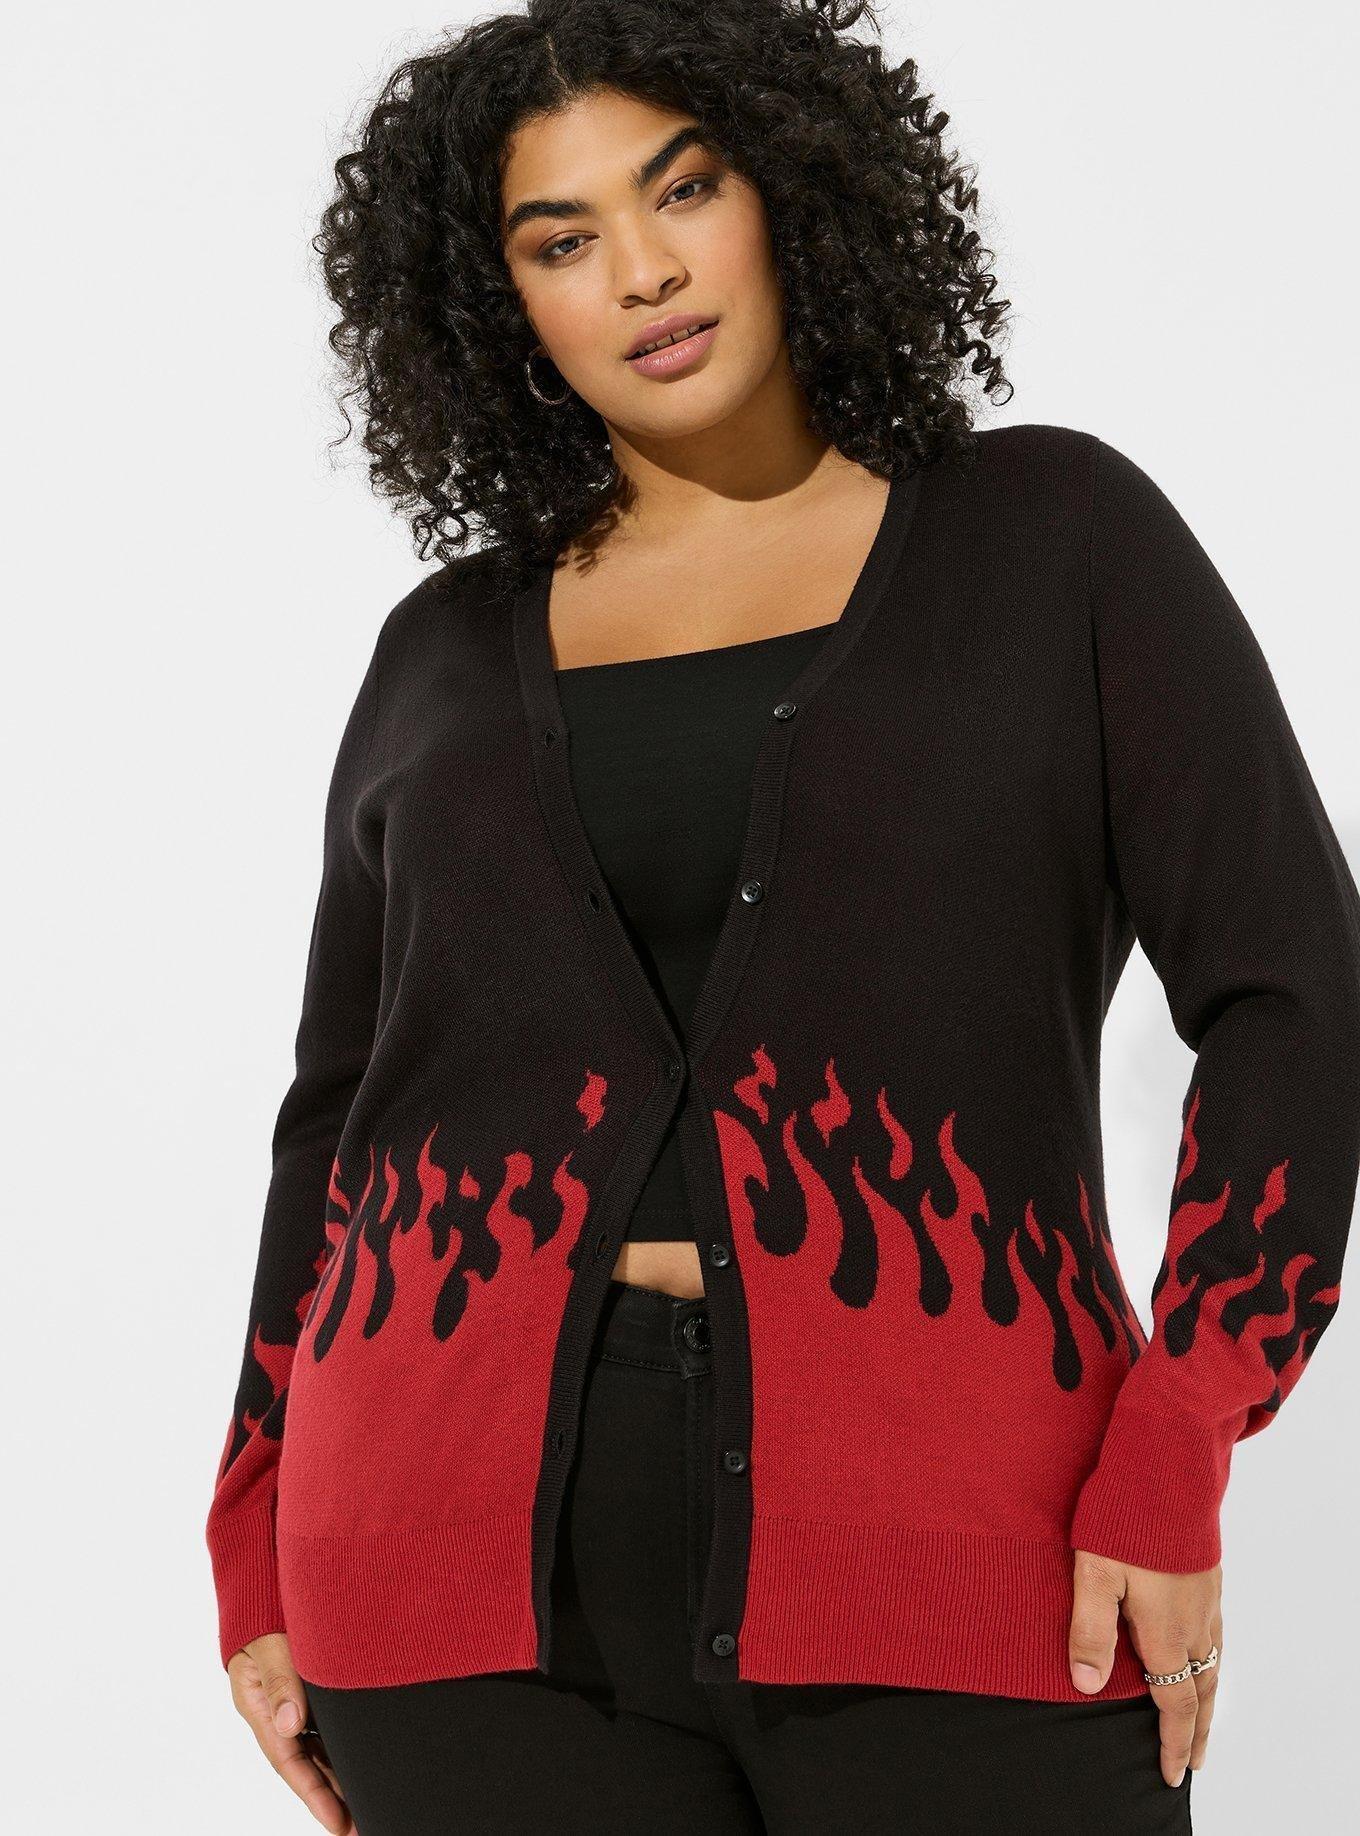 Addition Elle Plus Size Longline Cardigan Sweater Plus Size 1X Wine Color  New